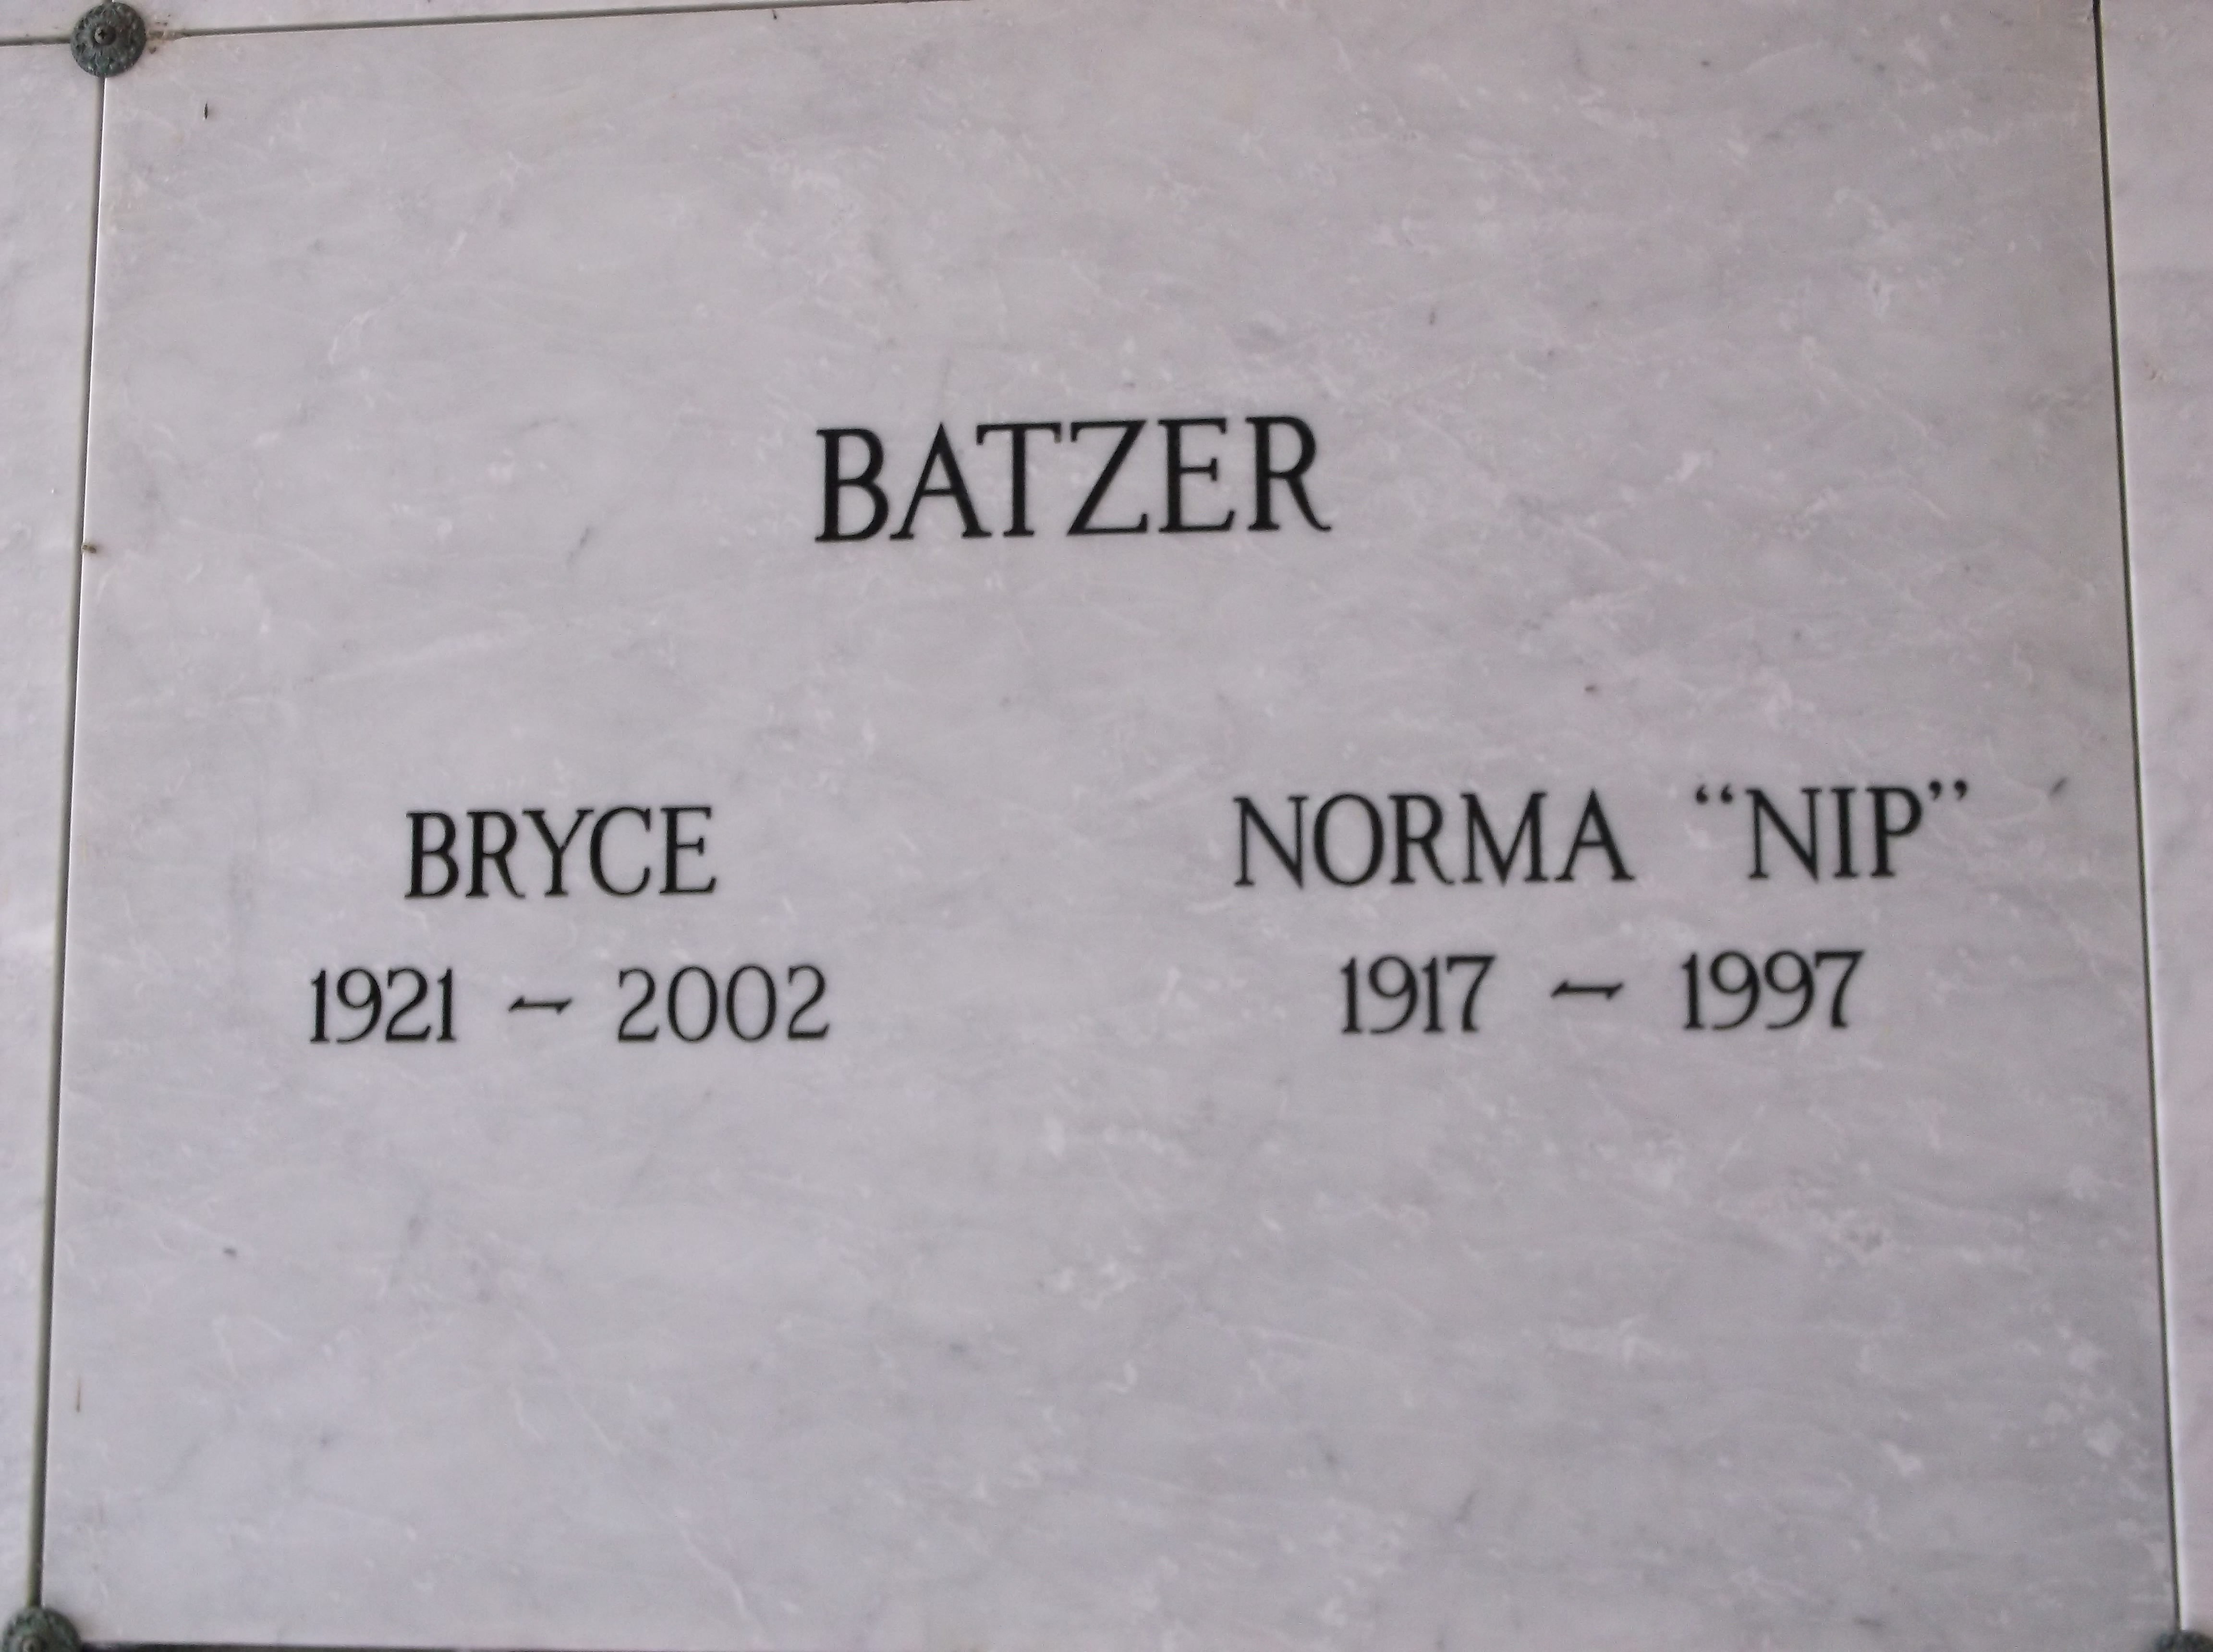 Norma "Nip" Batzer